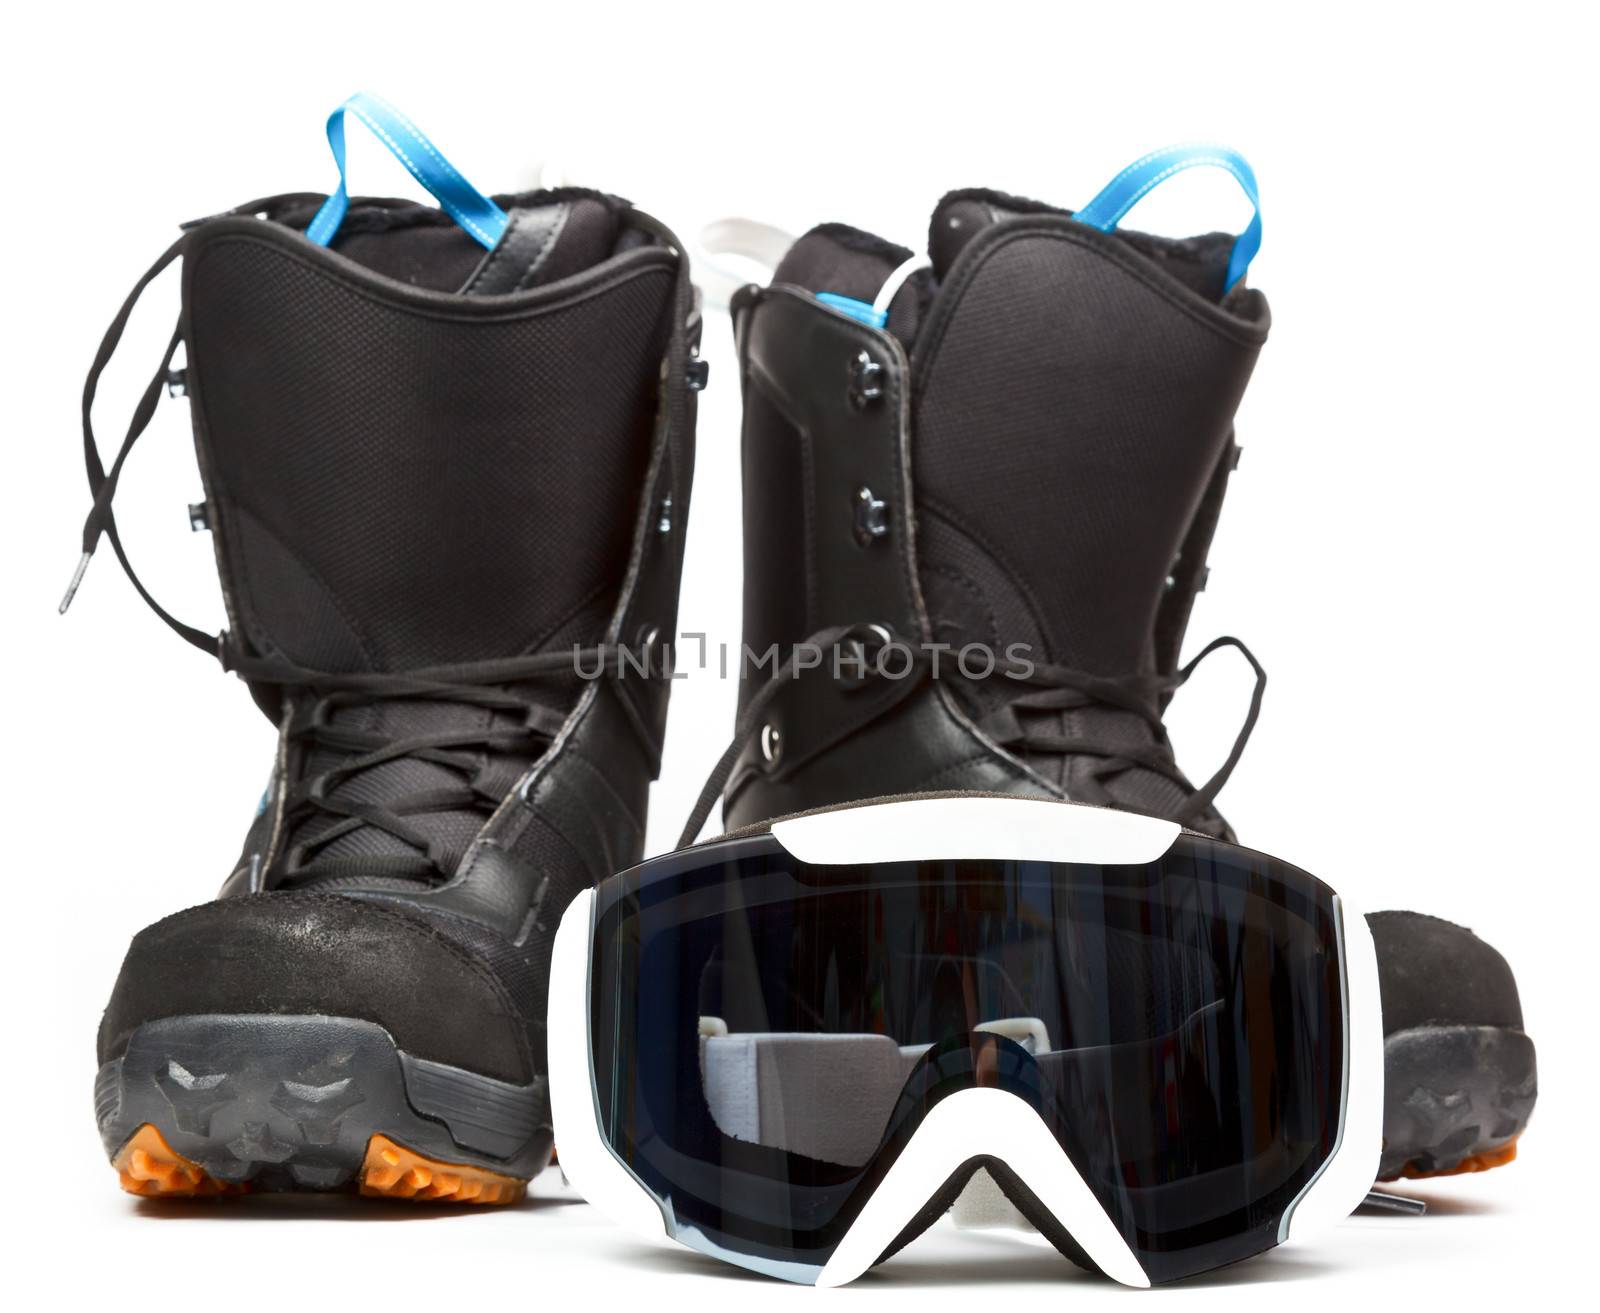 Snowboarding equipment by naumoid